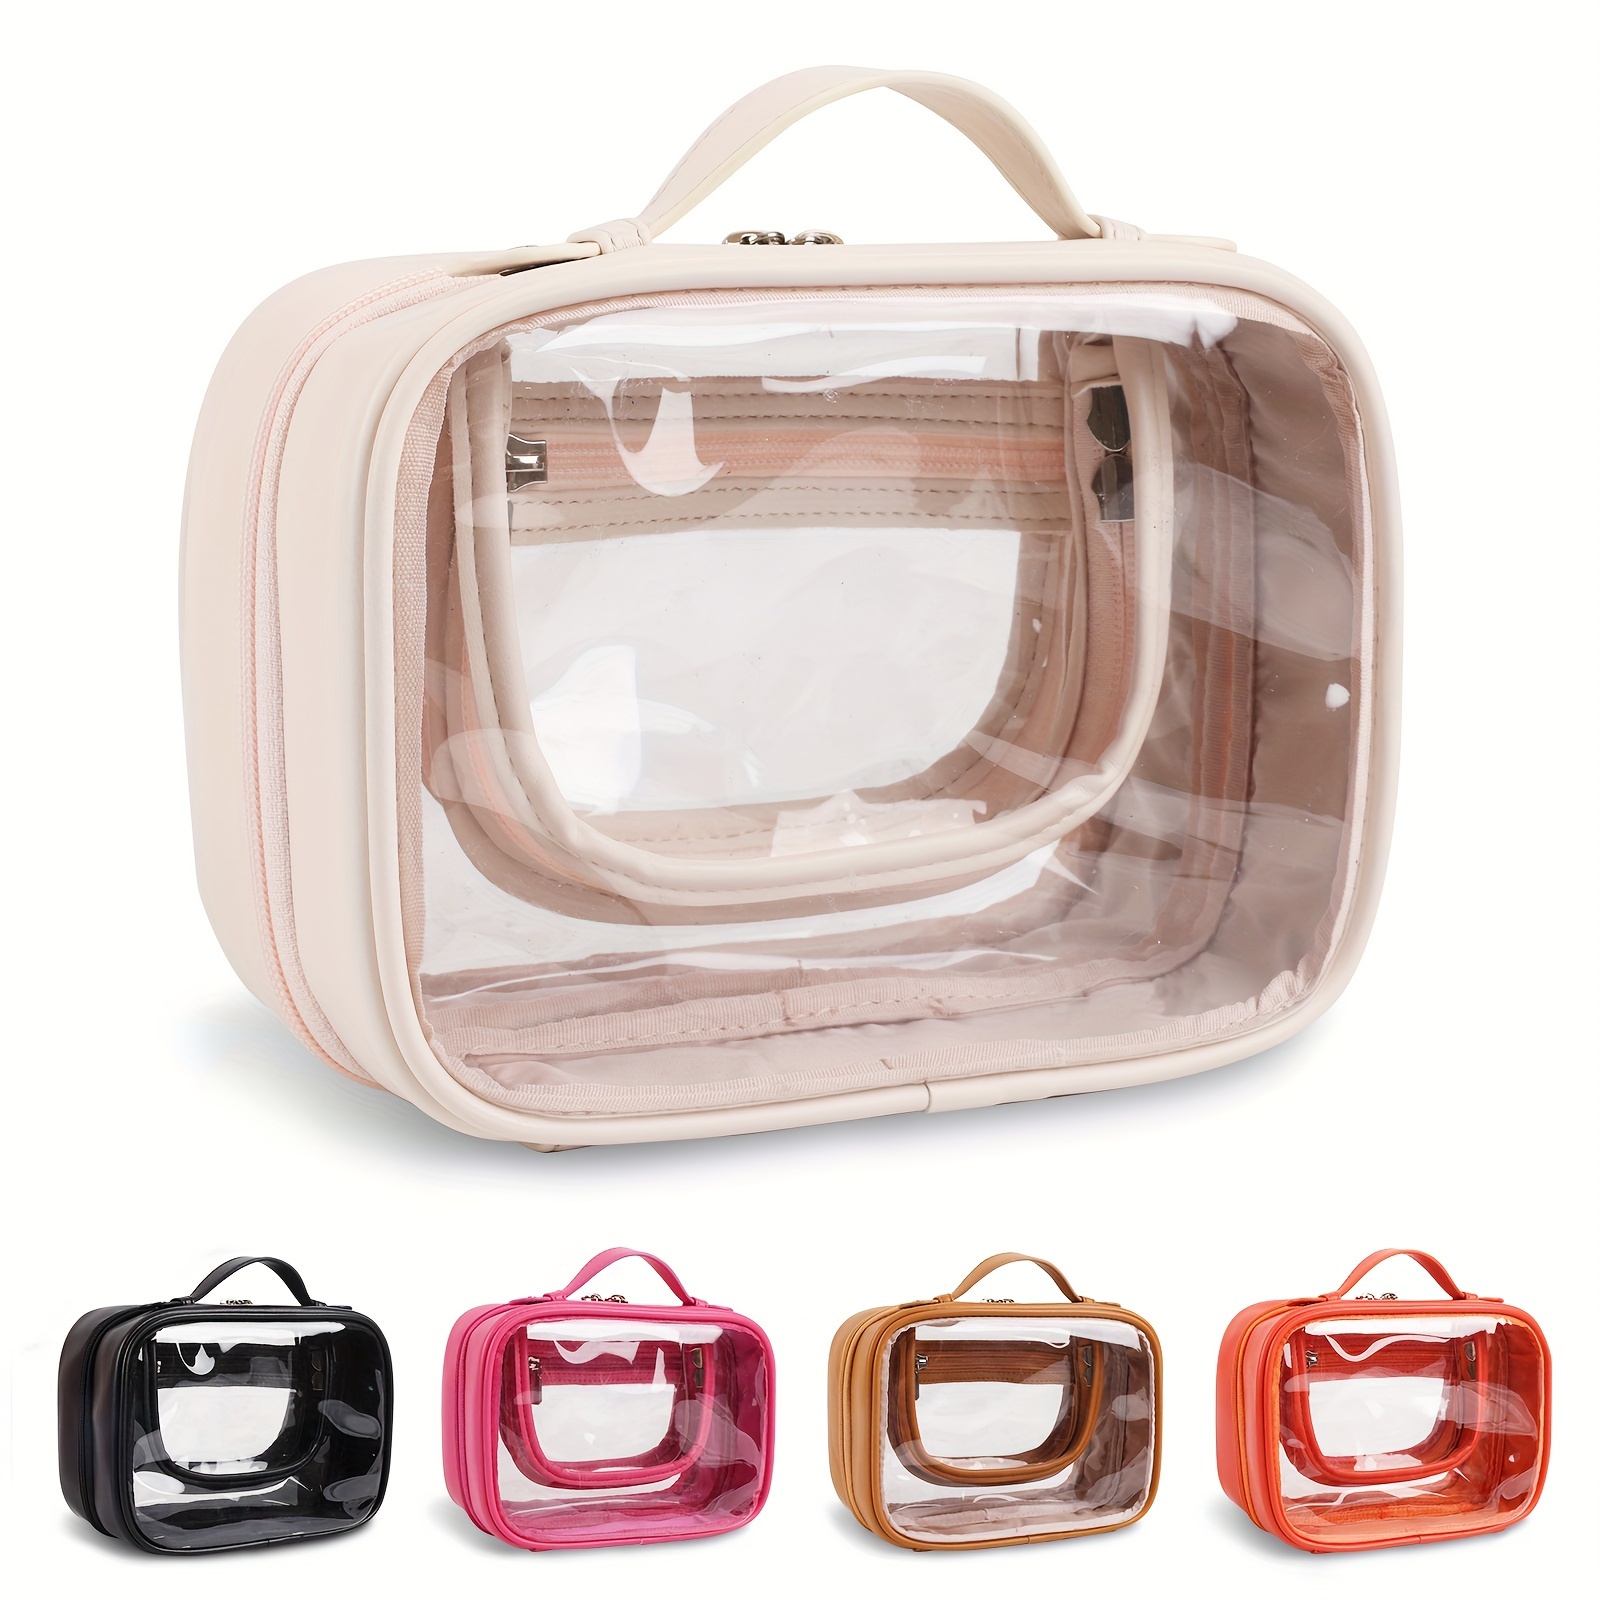 

Travel Clear Toiletry Bag Makeup Bag Cosmetic Bag, Tsa Approved Cosmetics Case Toiletry Bag With Handle, Zipper Makeup Handbag Waterproof Large Capacity Storage Organizer For Women Girls